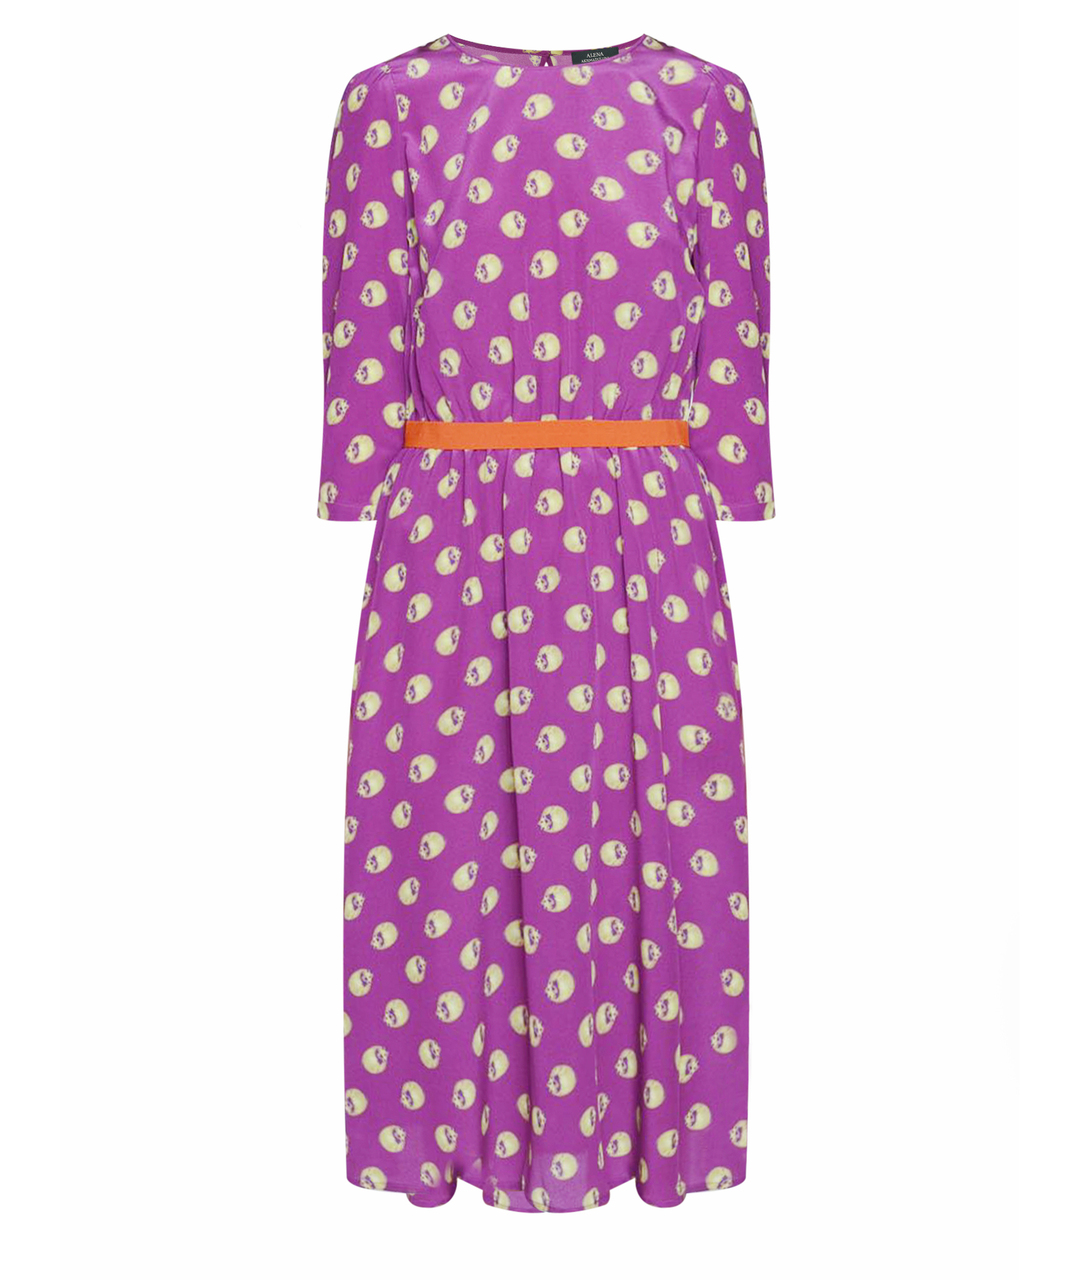 ALENA AKHMADULLINA Фиолетовое повседневное платье, фото 1